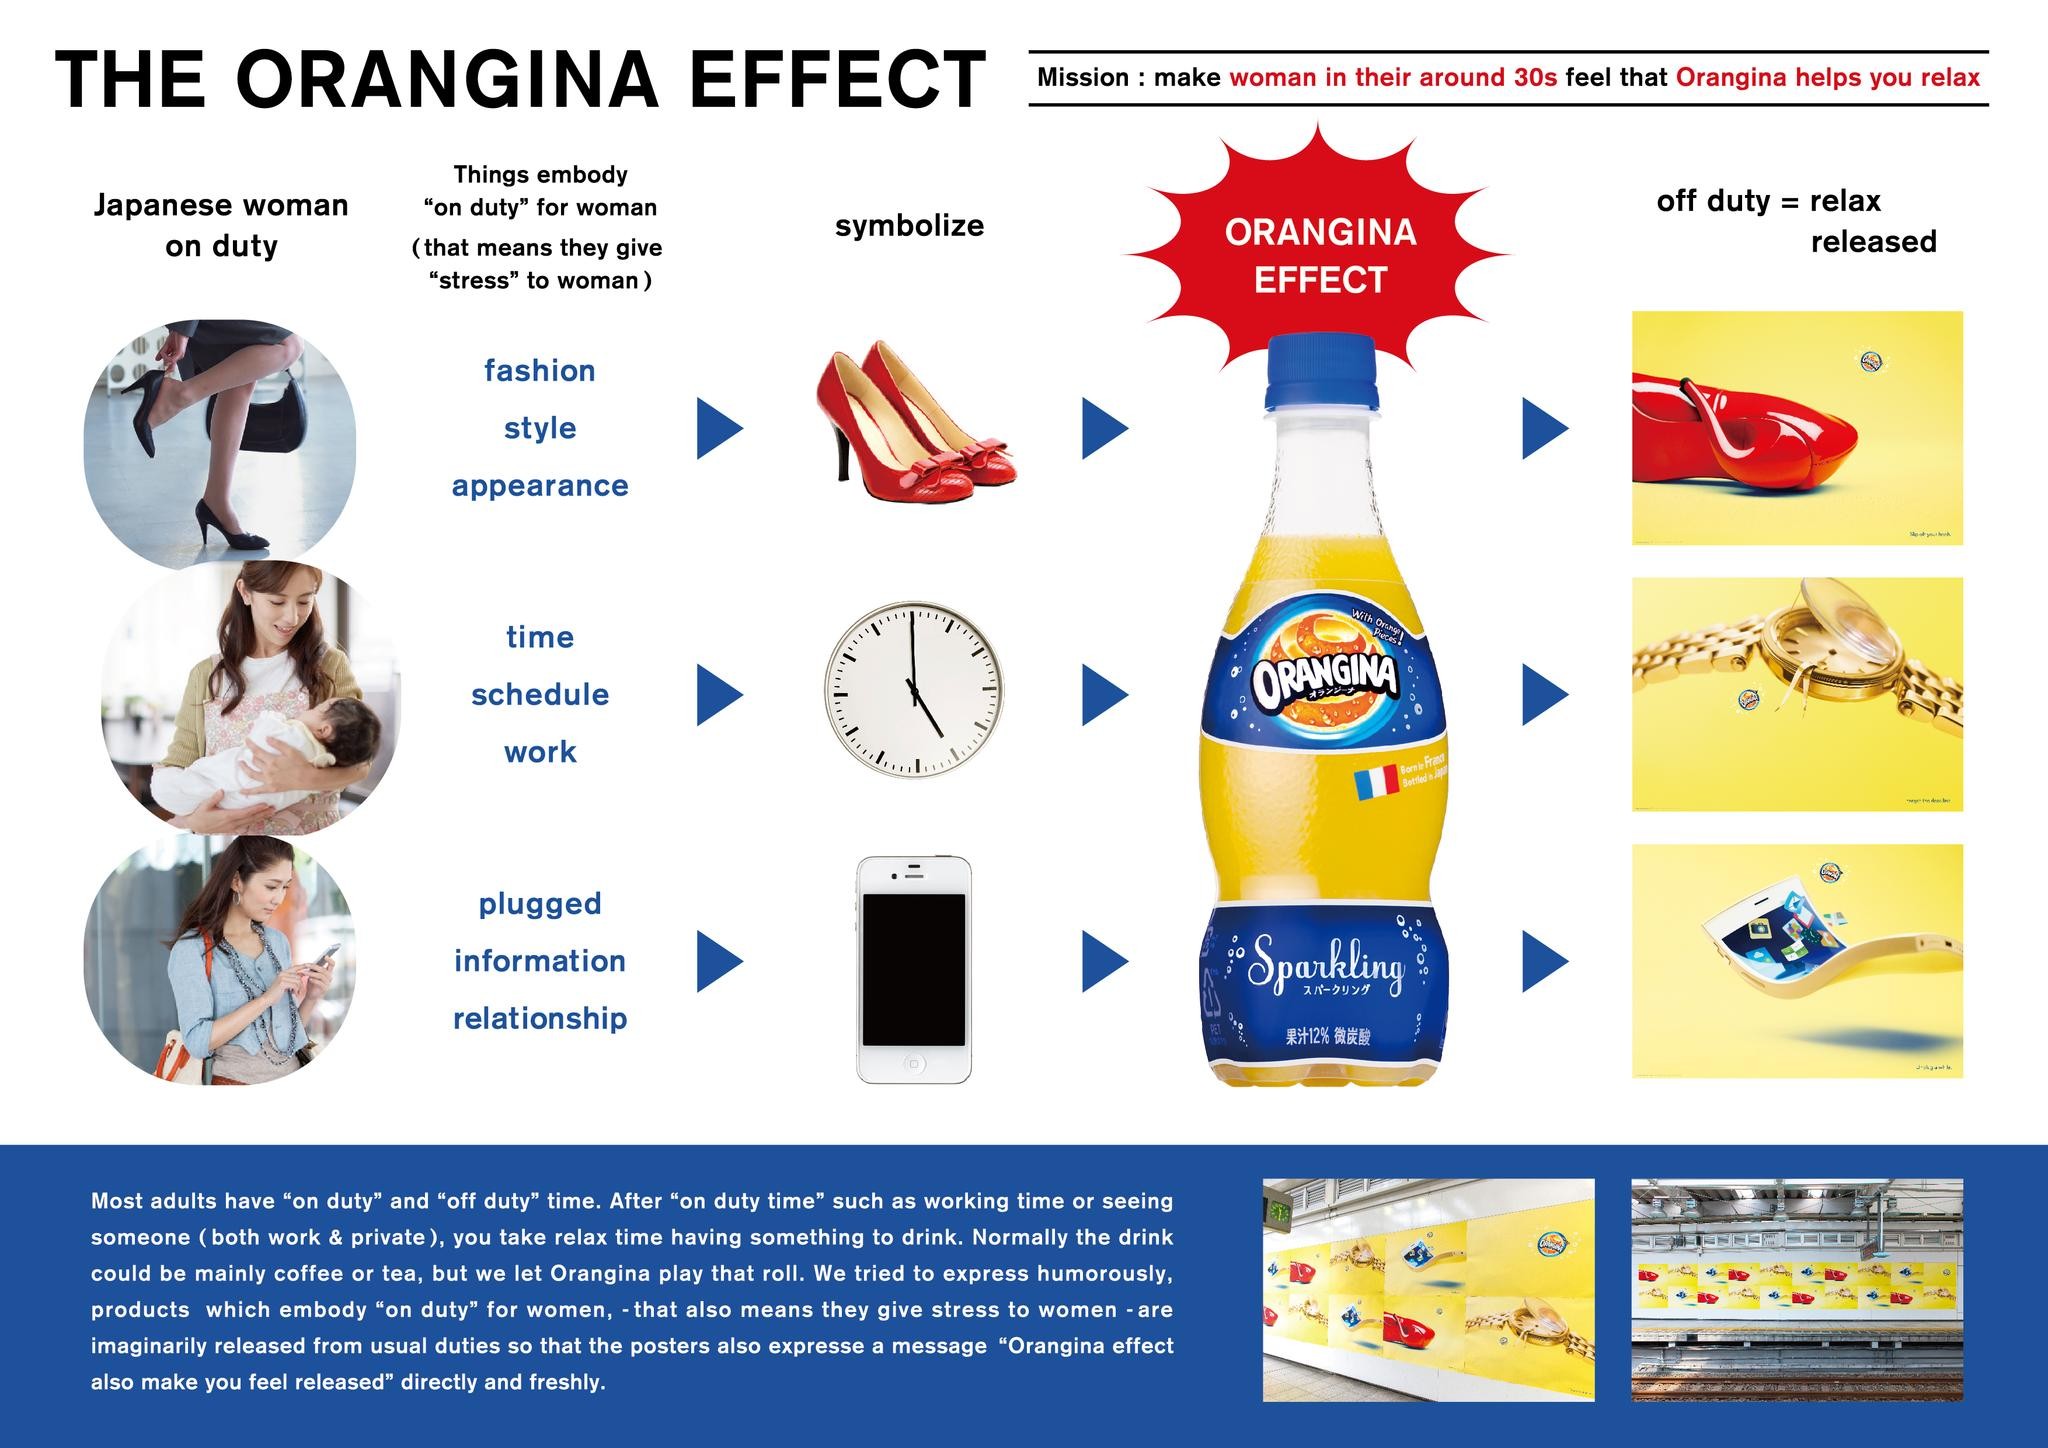 Orangina Effect high heel